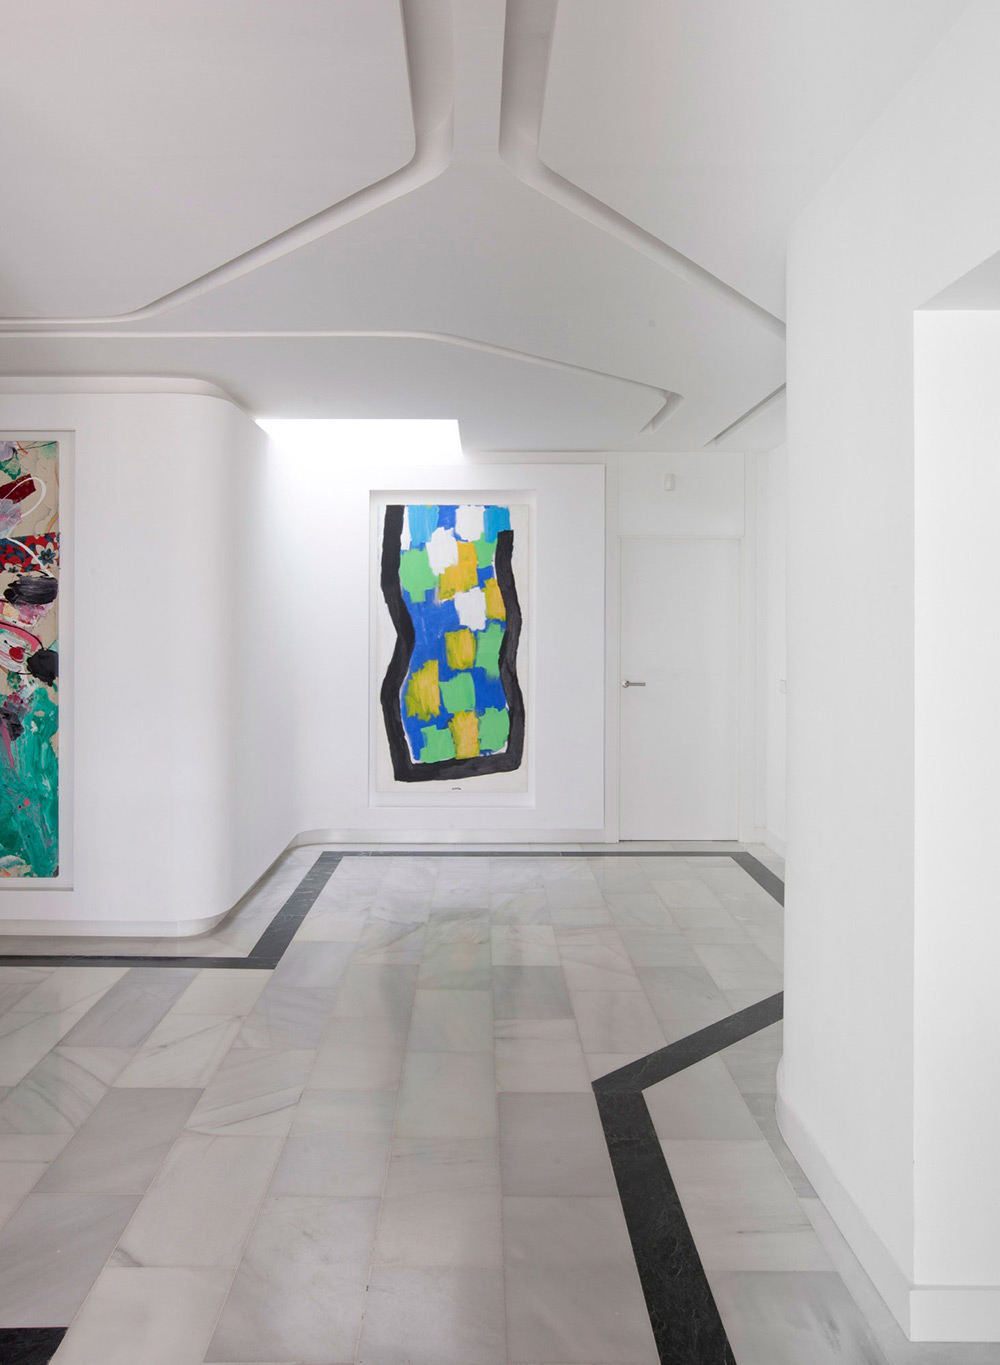 Marble Floor, Art, Modern Apartment in Madrid Designed by IlmioDesign